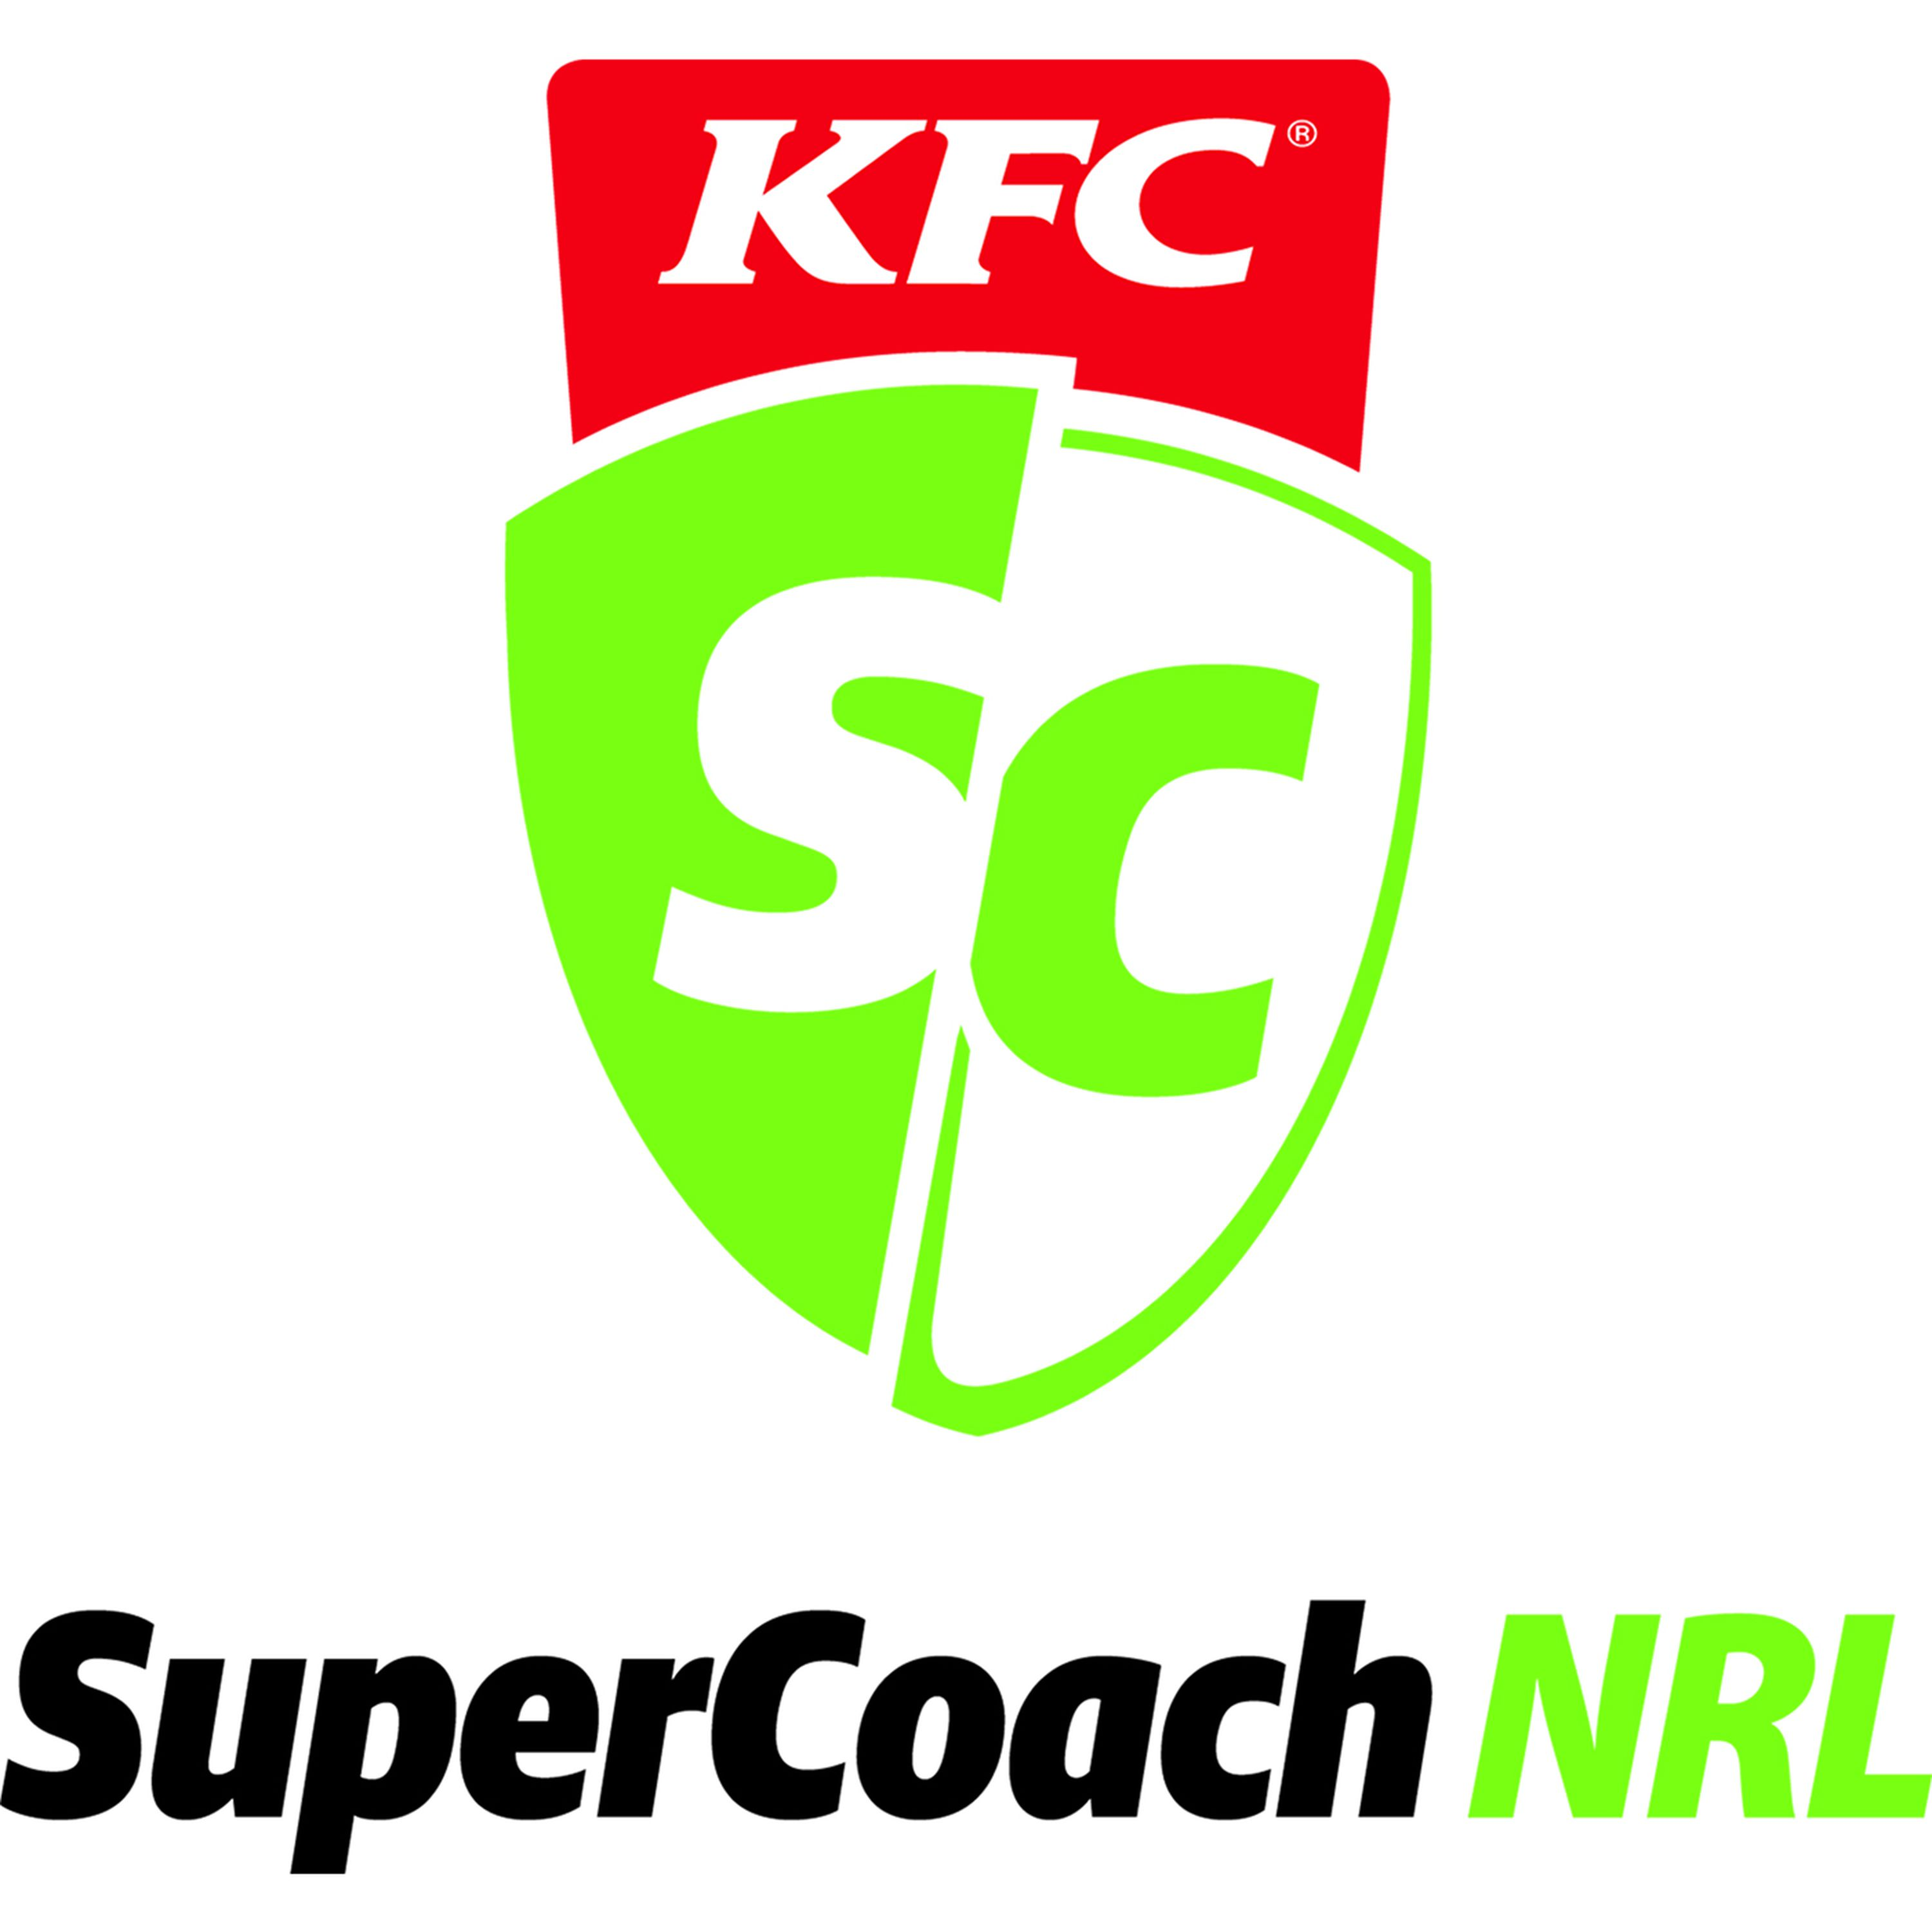 KFC SuperCoach podcast: One week to season